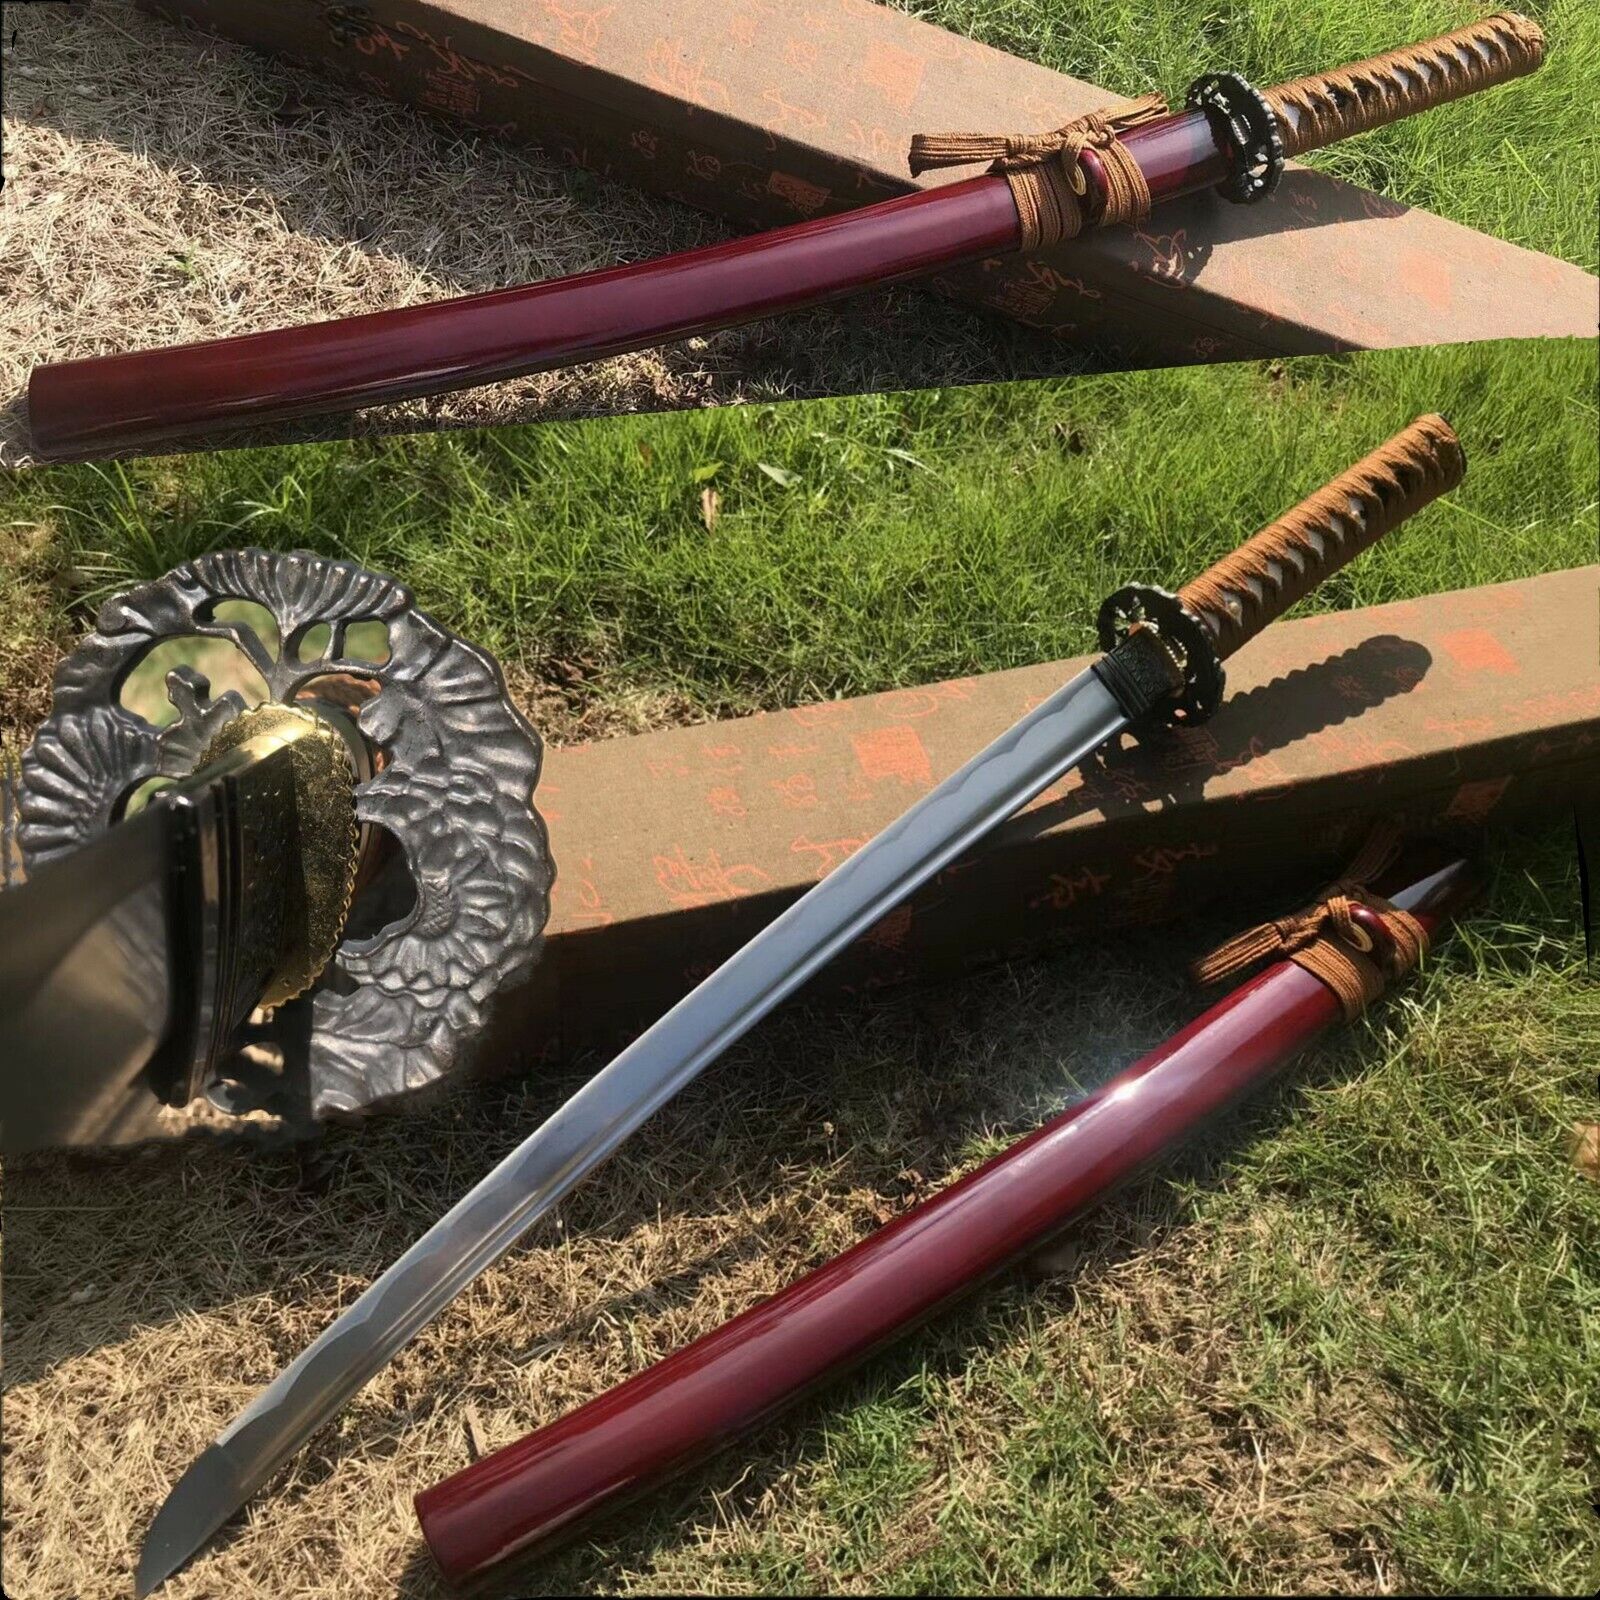 KO-Wakizashi Japanese Samurai Katana Sword 1095 Steel Full Tang Sharp